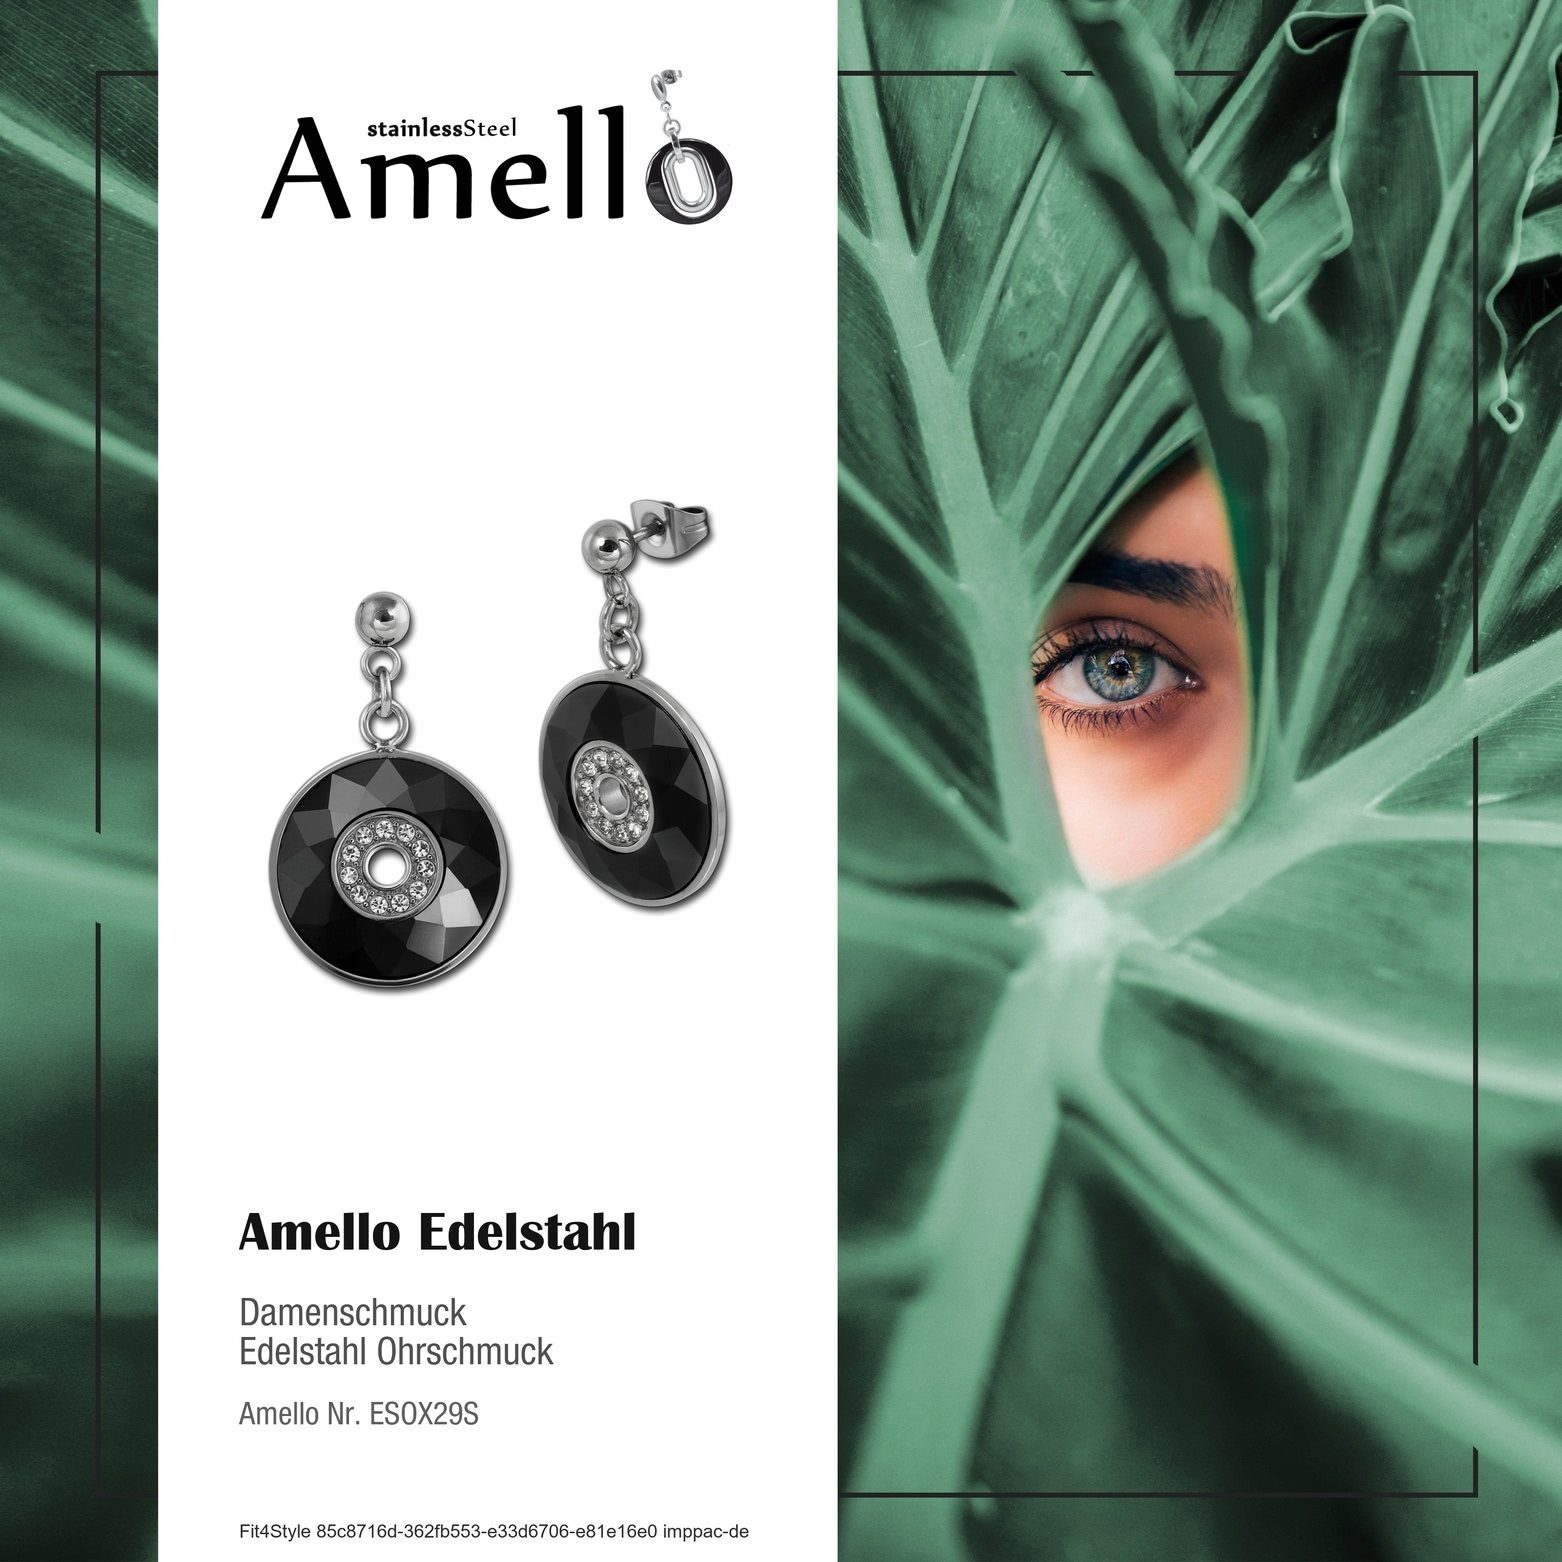 Ohrhänger Paar Keramik Edelstahl schwarz (Ohrhänger), Damen silberfarben, Amello Amello Ohrhänger Ohrringe Steel), (Stainless in Edelstahl